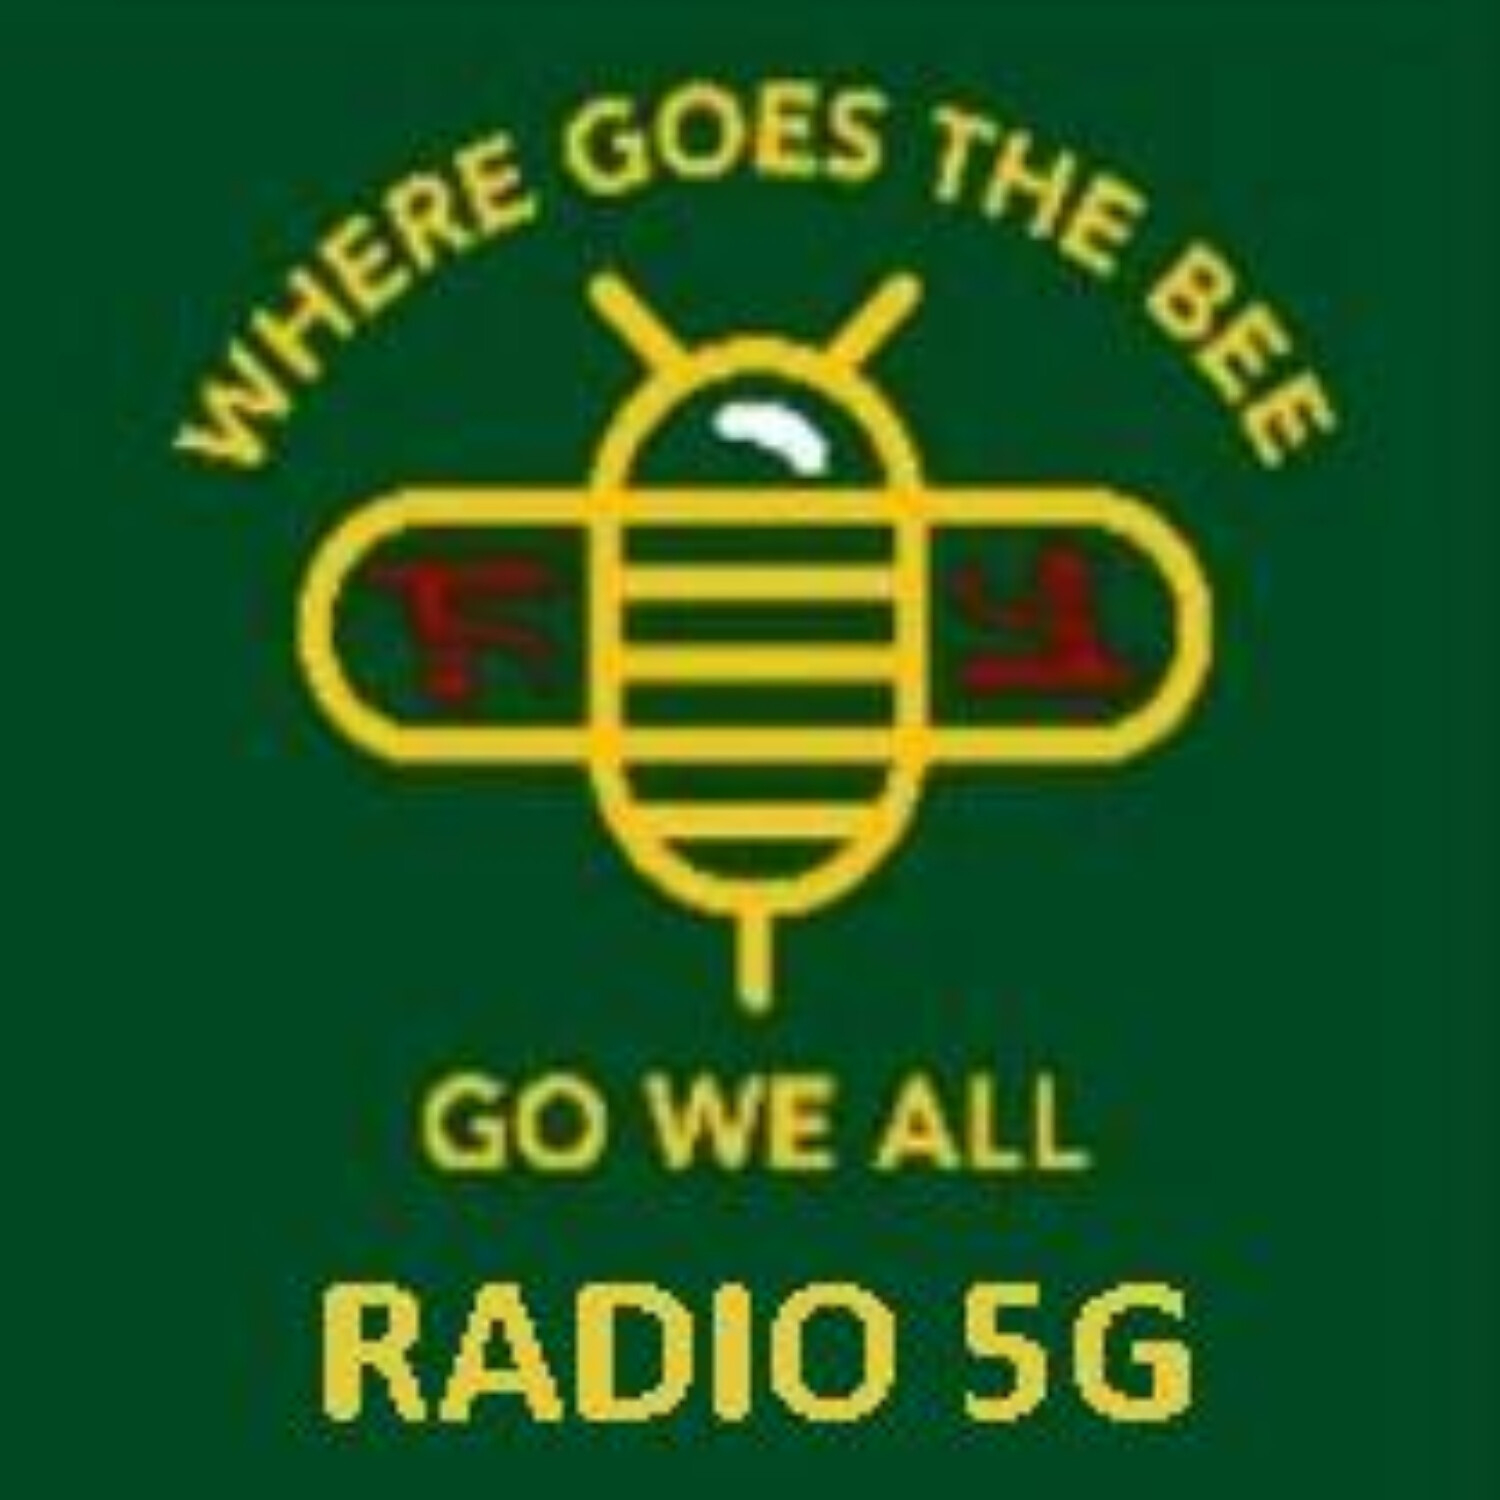 “RADIO 5G” 6/8/22 - Bards FM and Attorney Todd Callender